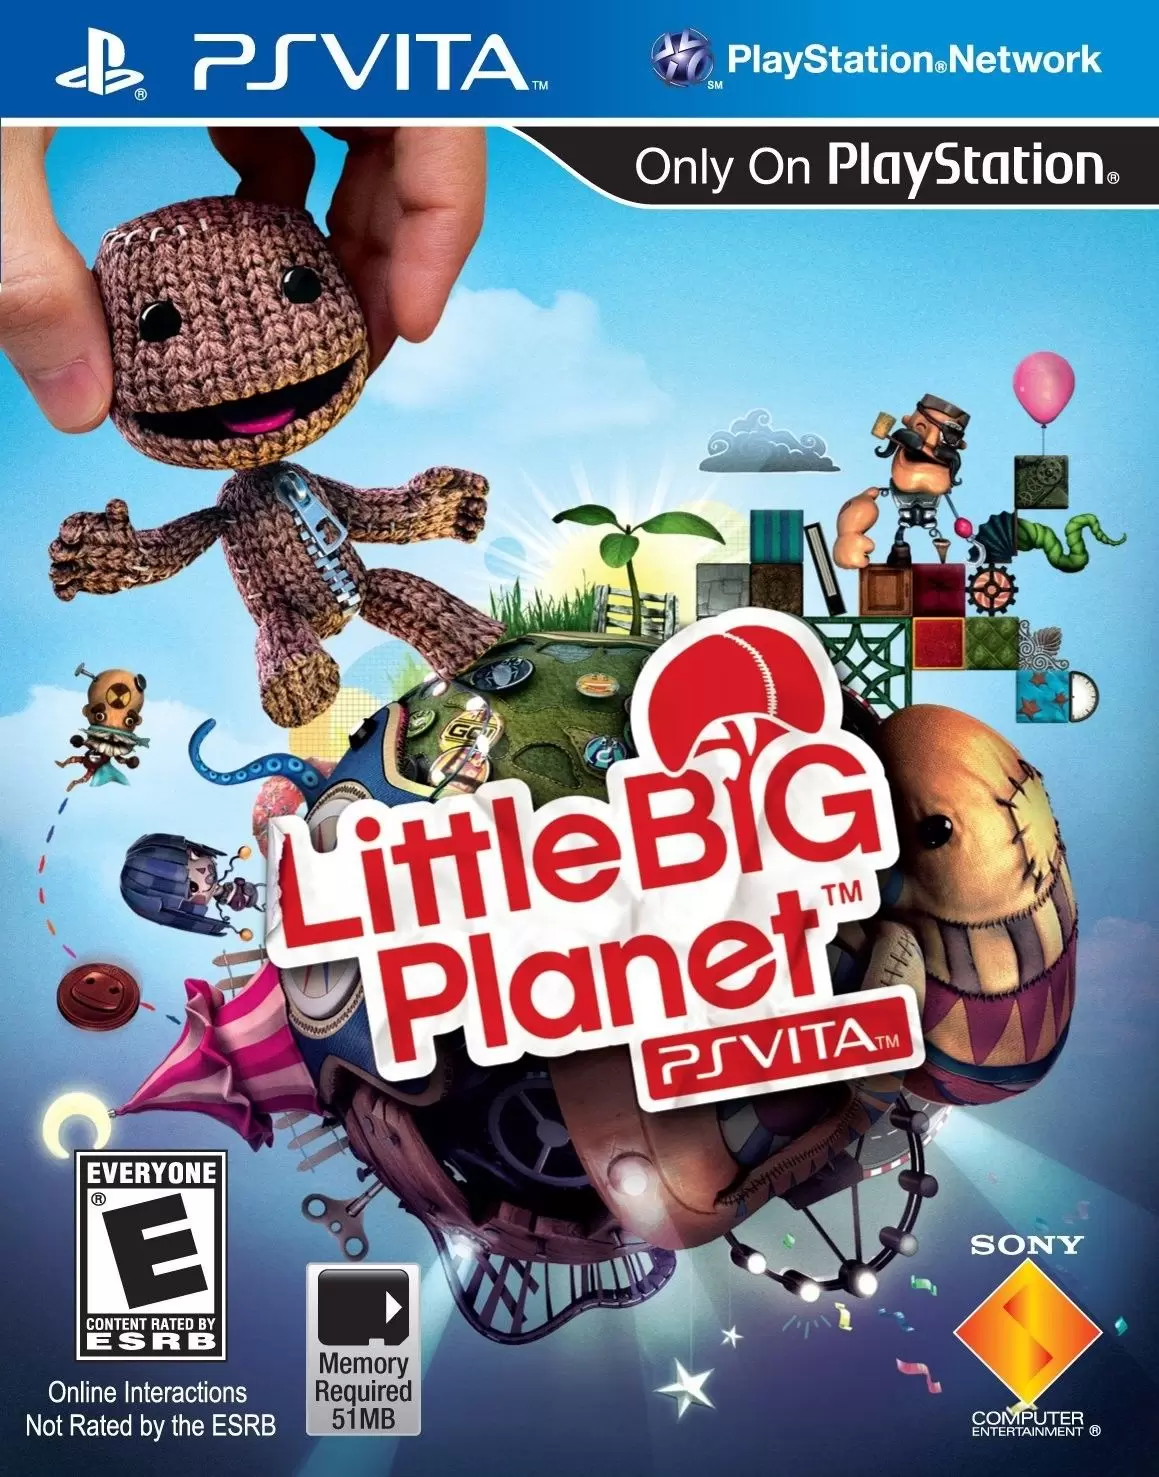 PS Vita Games - LittleBigPlanet